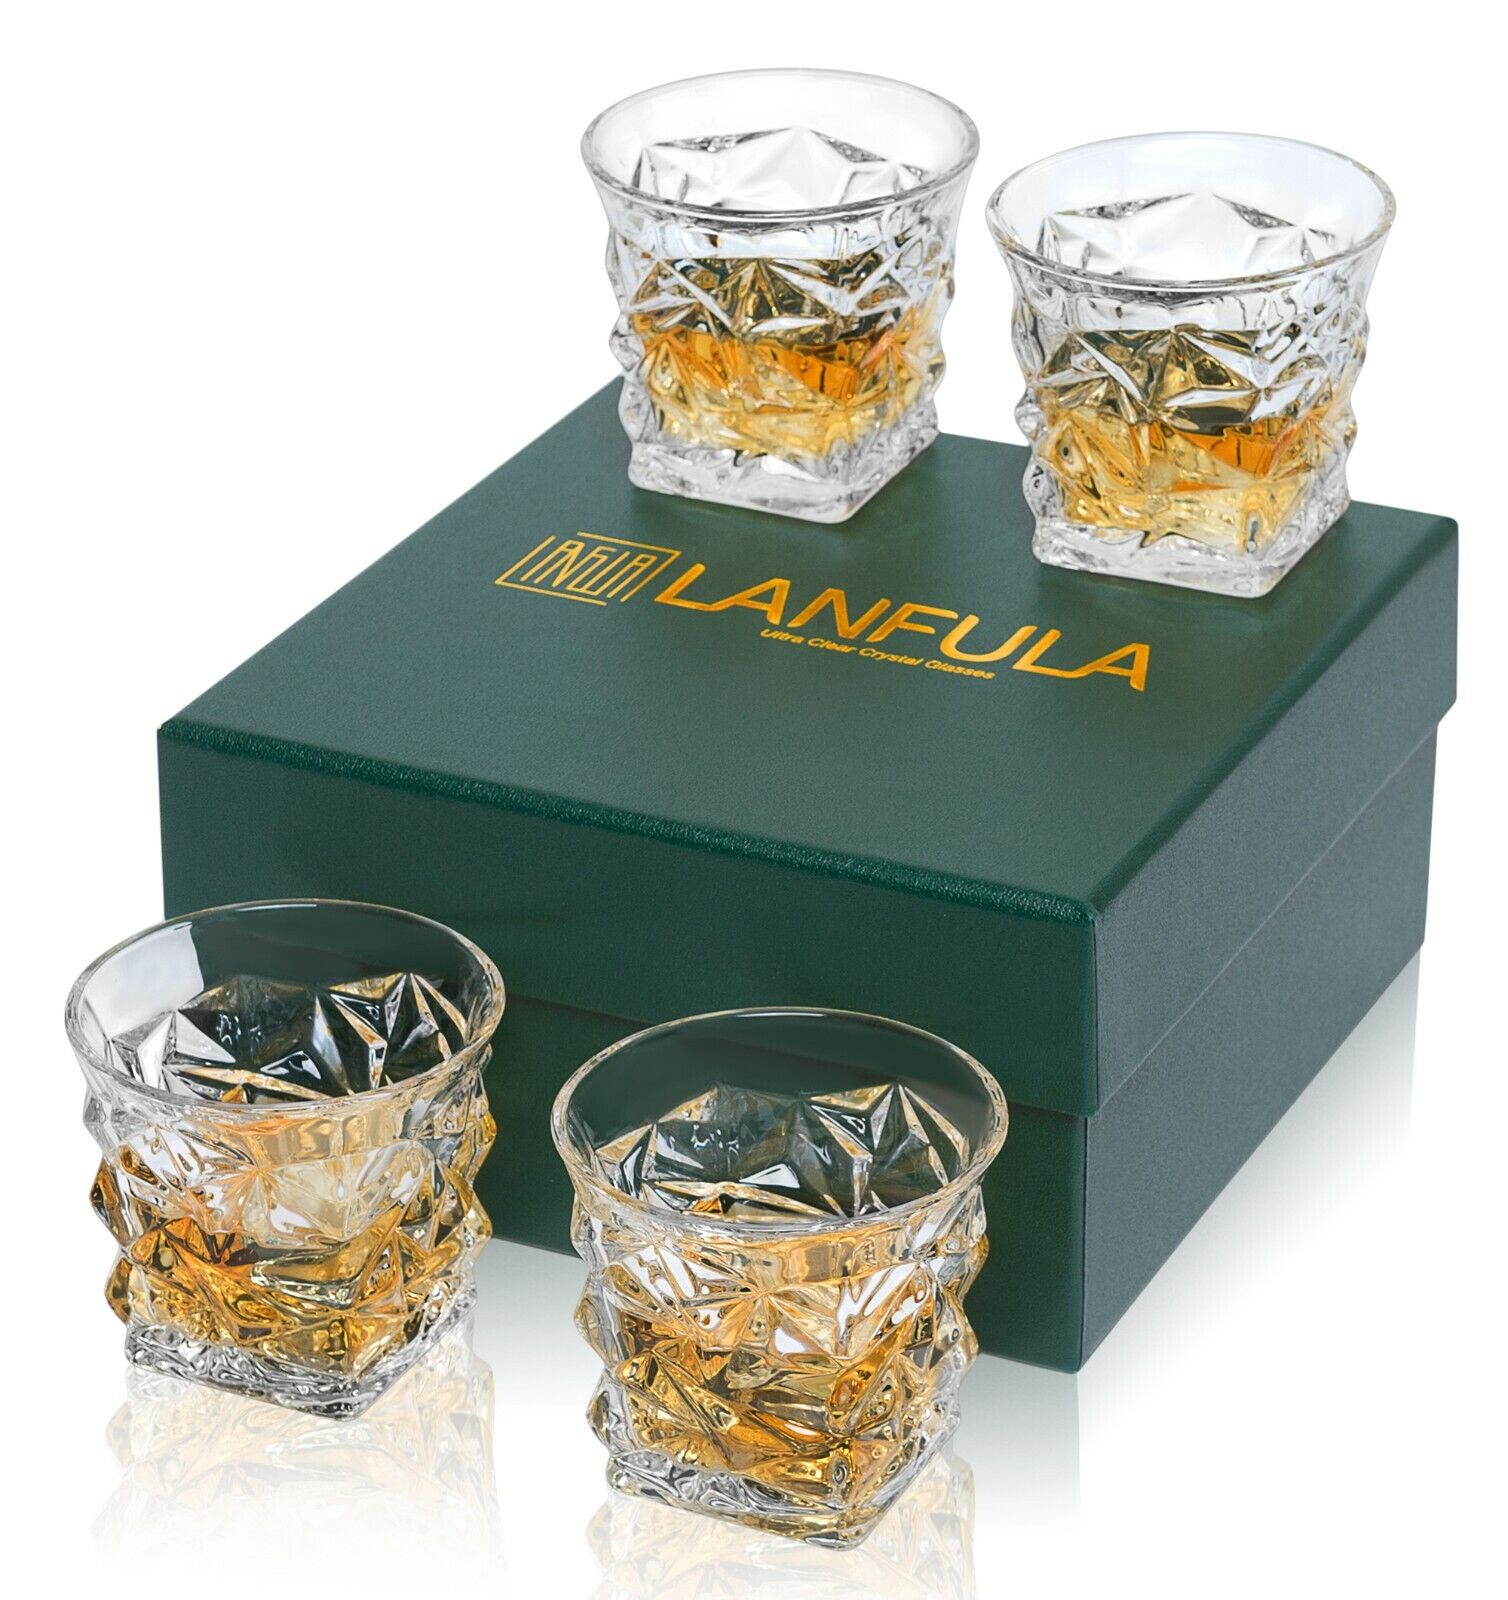 Diamond Whiskey Glasses LANFULA Crystal Old fashioned Scotch Tumblers Men Gift